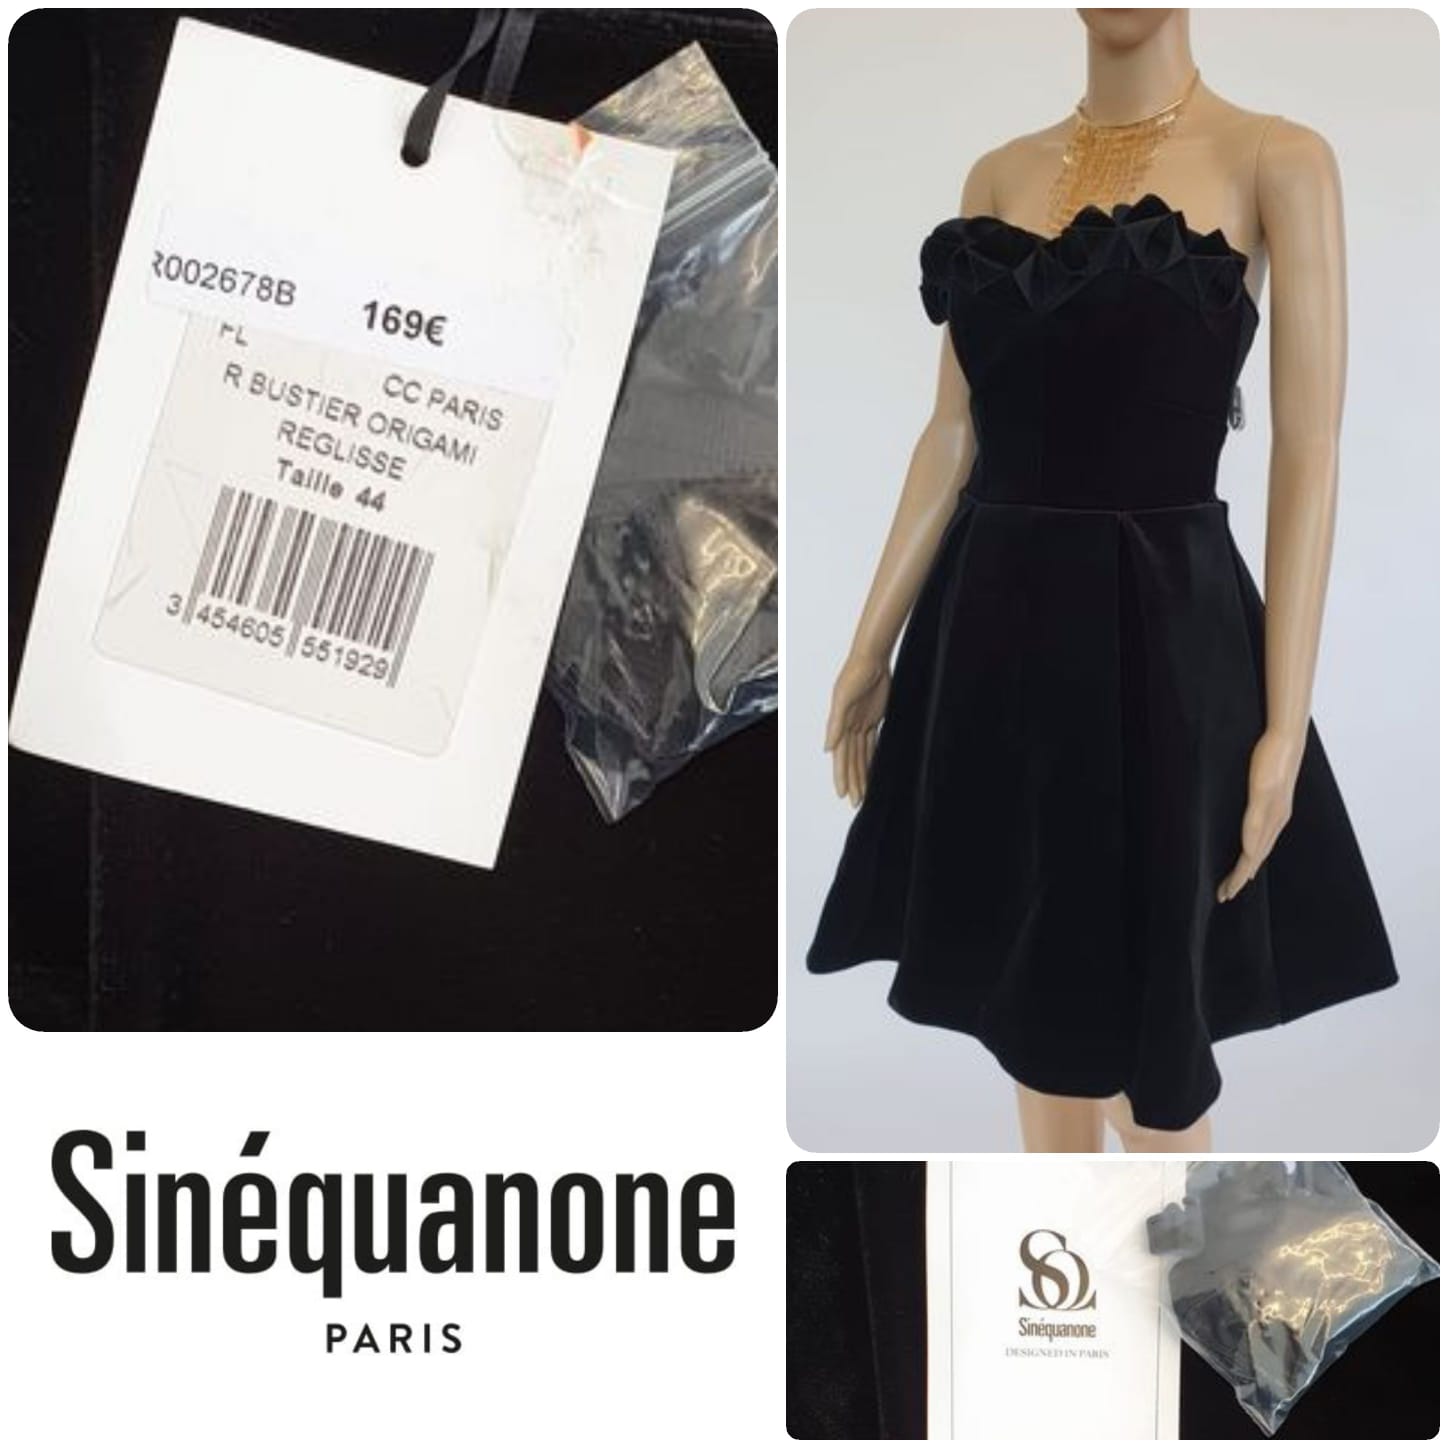 Black dress by Sinequanone Paris